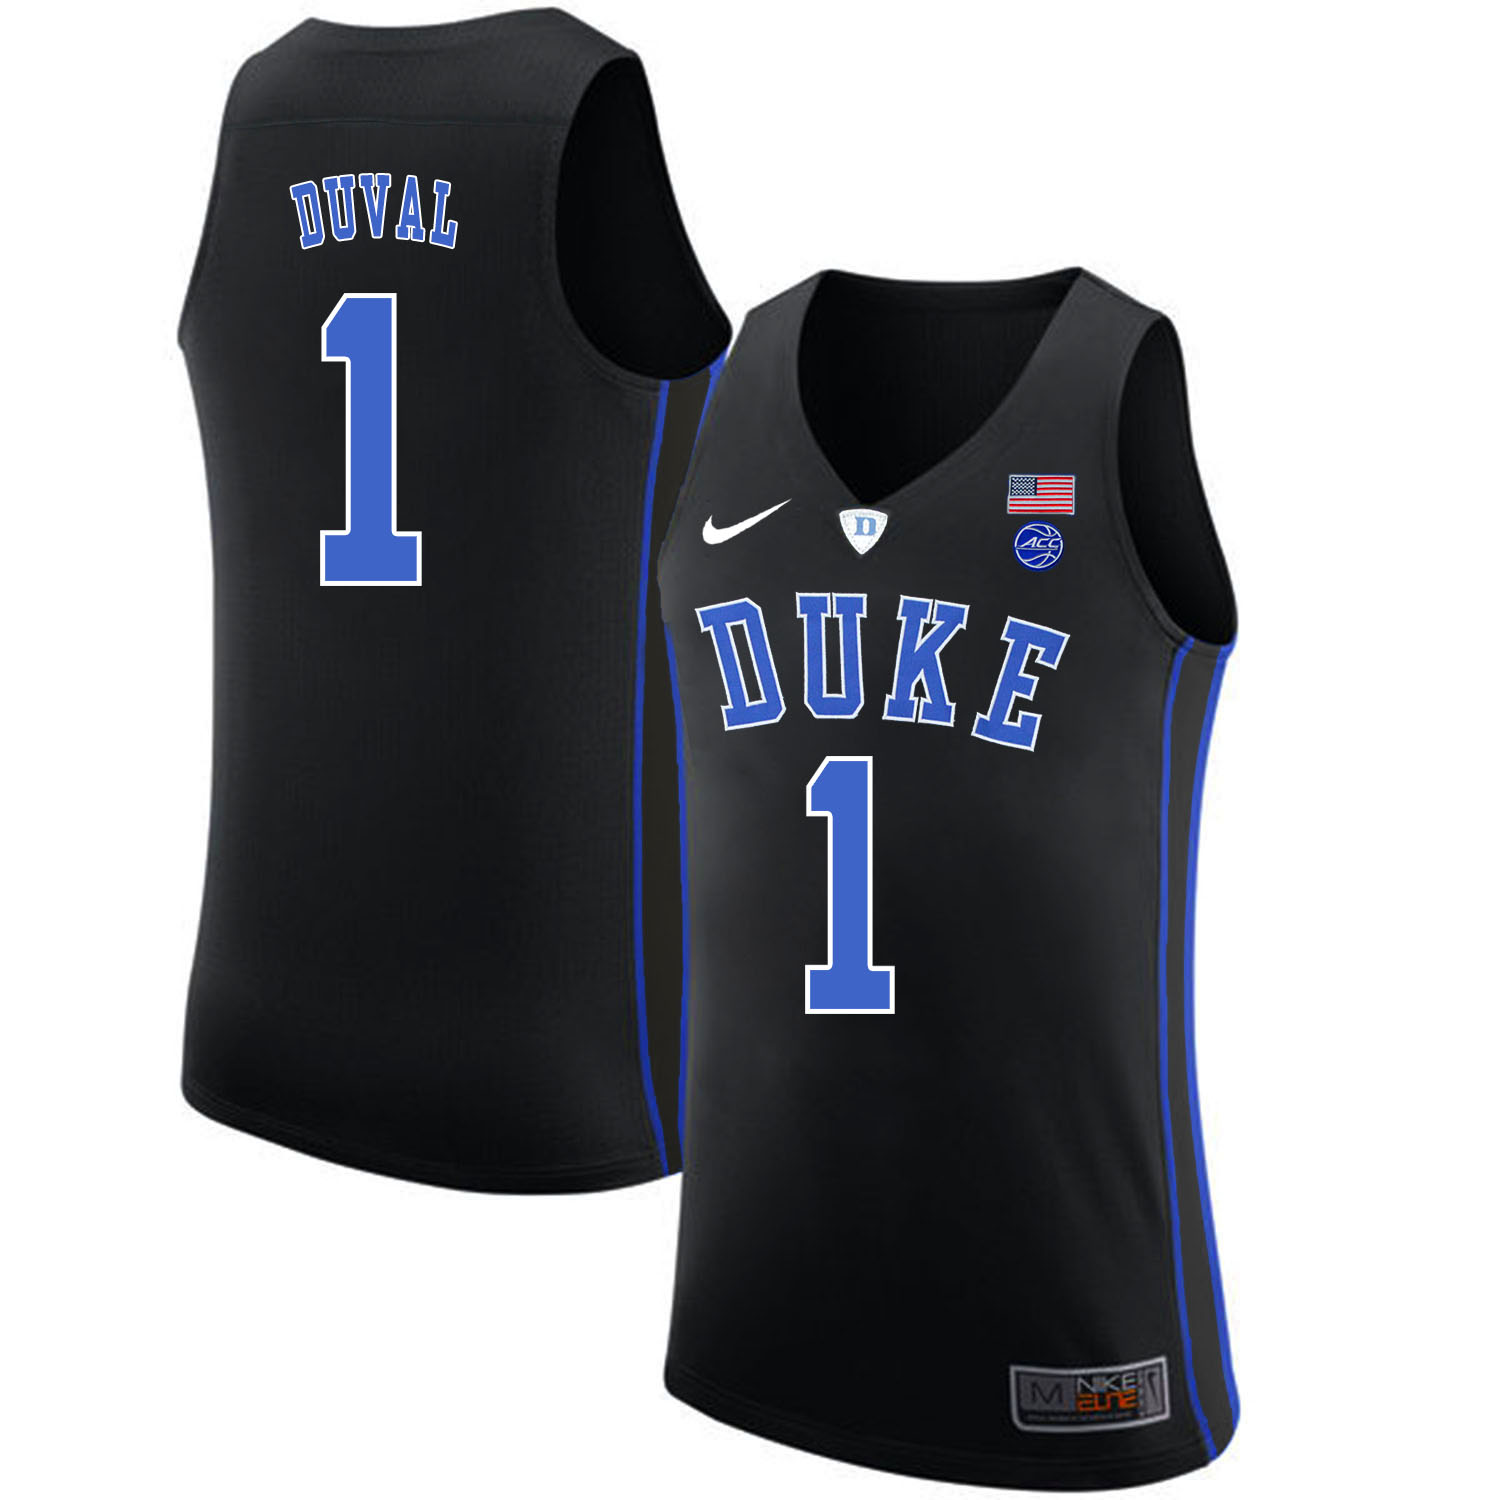 Duke Blue Devils 1 Trevon Duval Black Nike College Basketabll Jersey